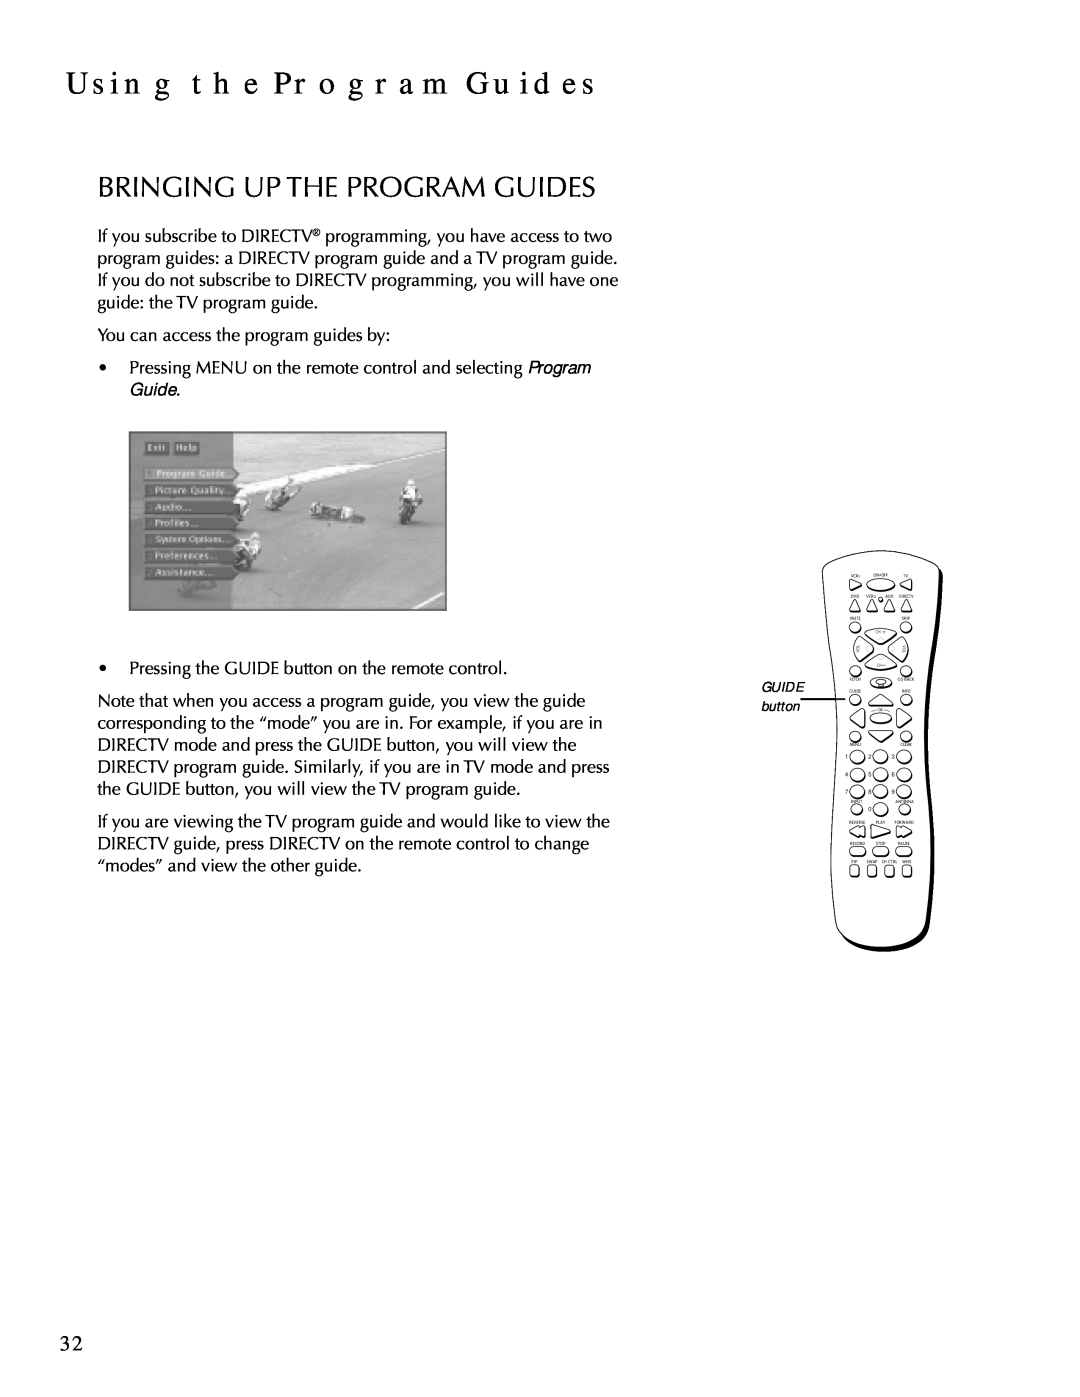 DirecTV HDTV user manual Using The Program Guides, Bringing Up The Program Guides 